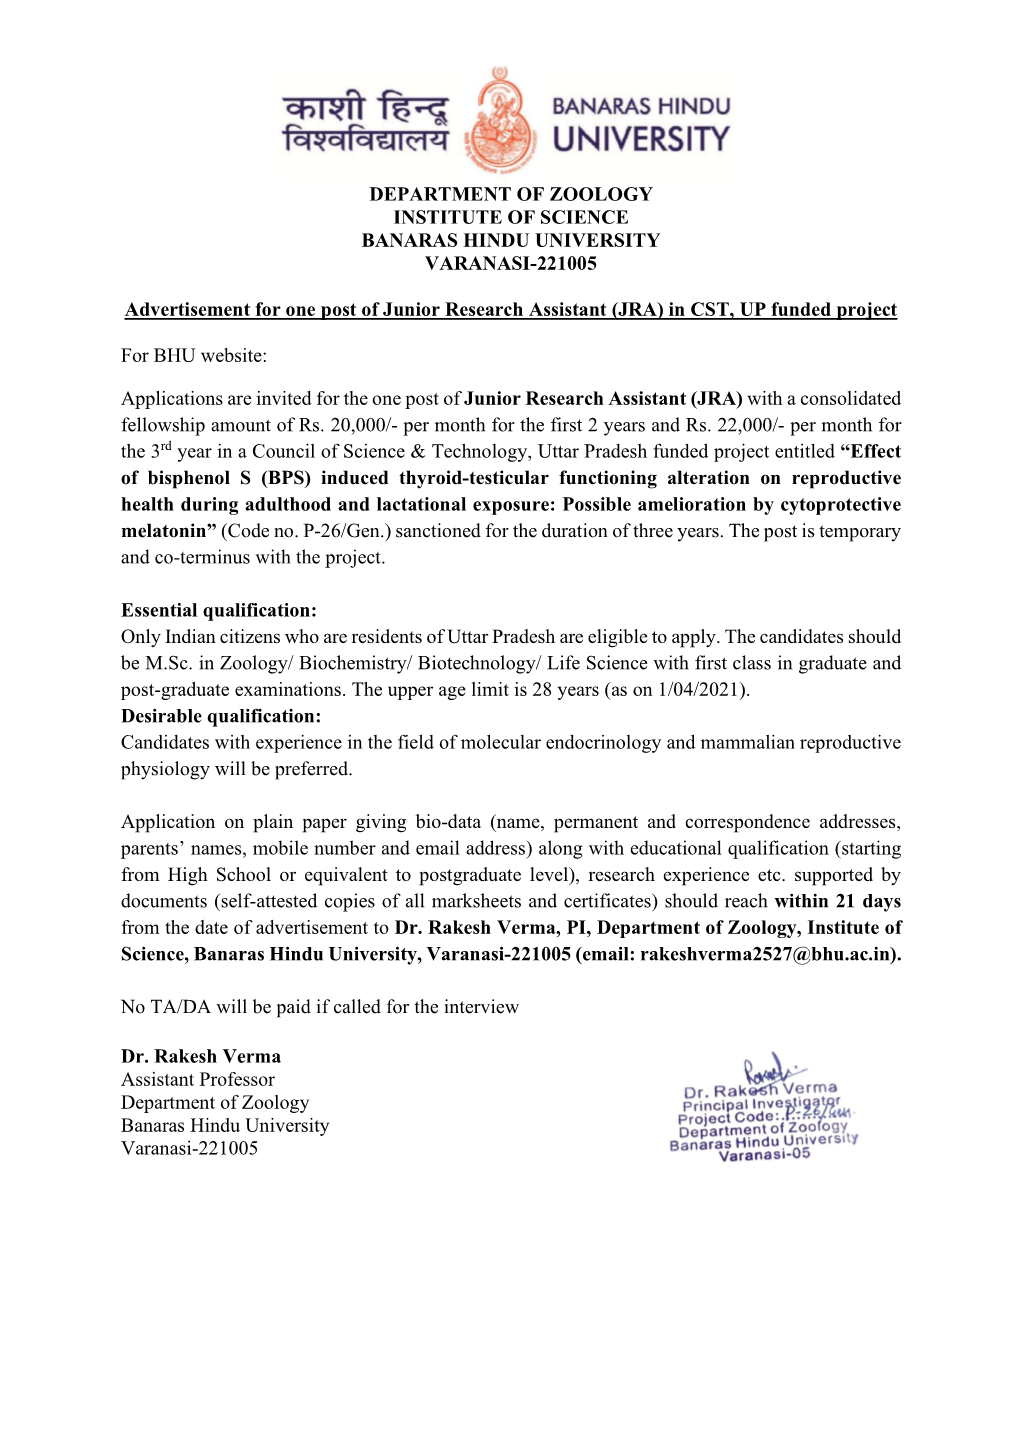 DEPARTMENT of ZOOLOGY INSTITUTE of SCIENCE BANARAS HINDU UNIVERSITY VARANASI-221005 Advertisement for One Post of Junior Researc